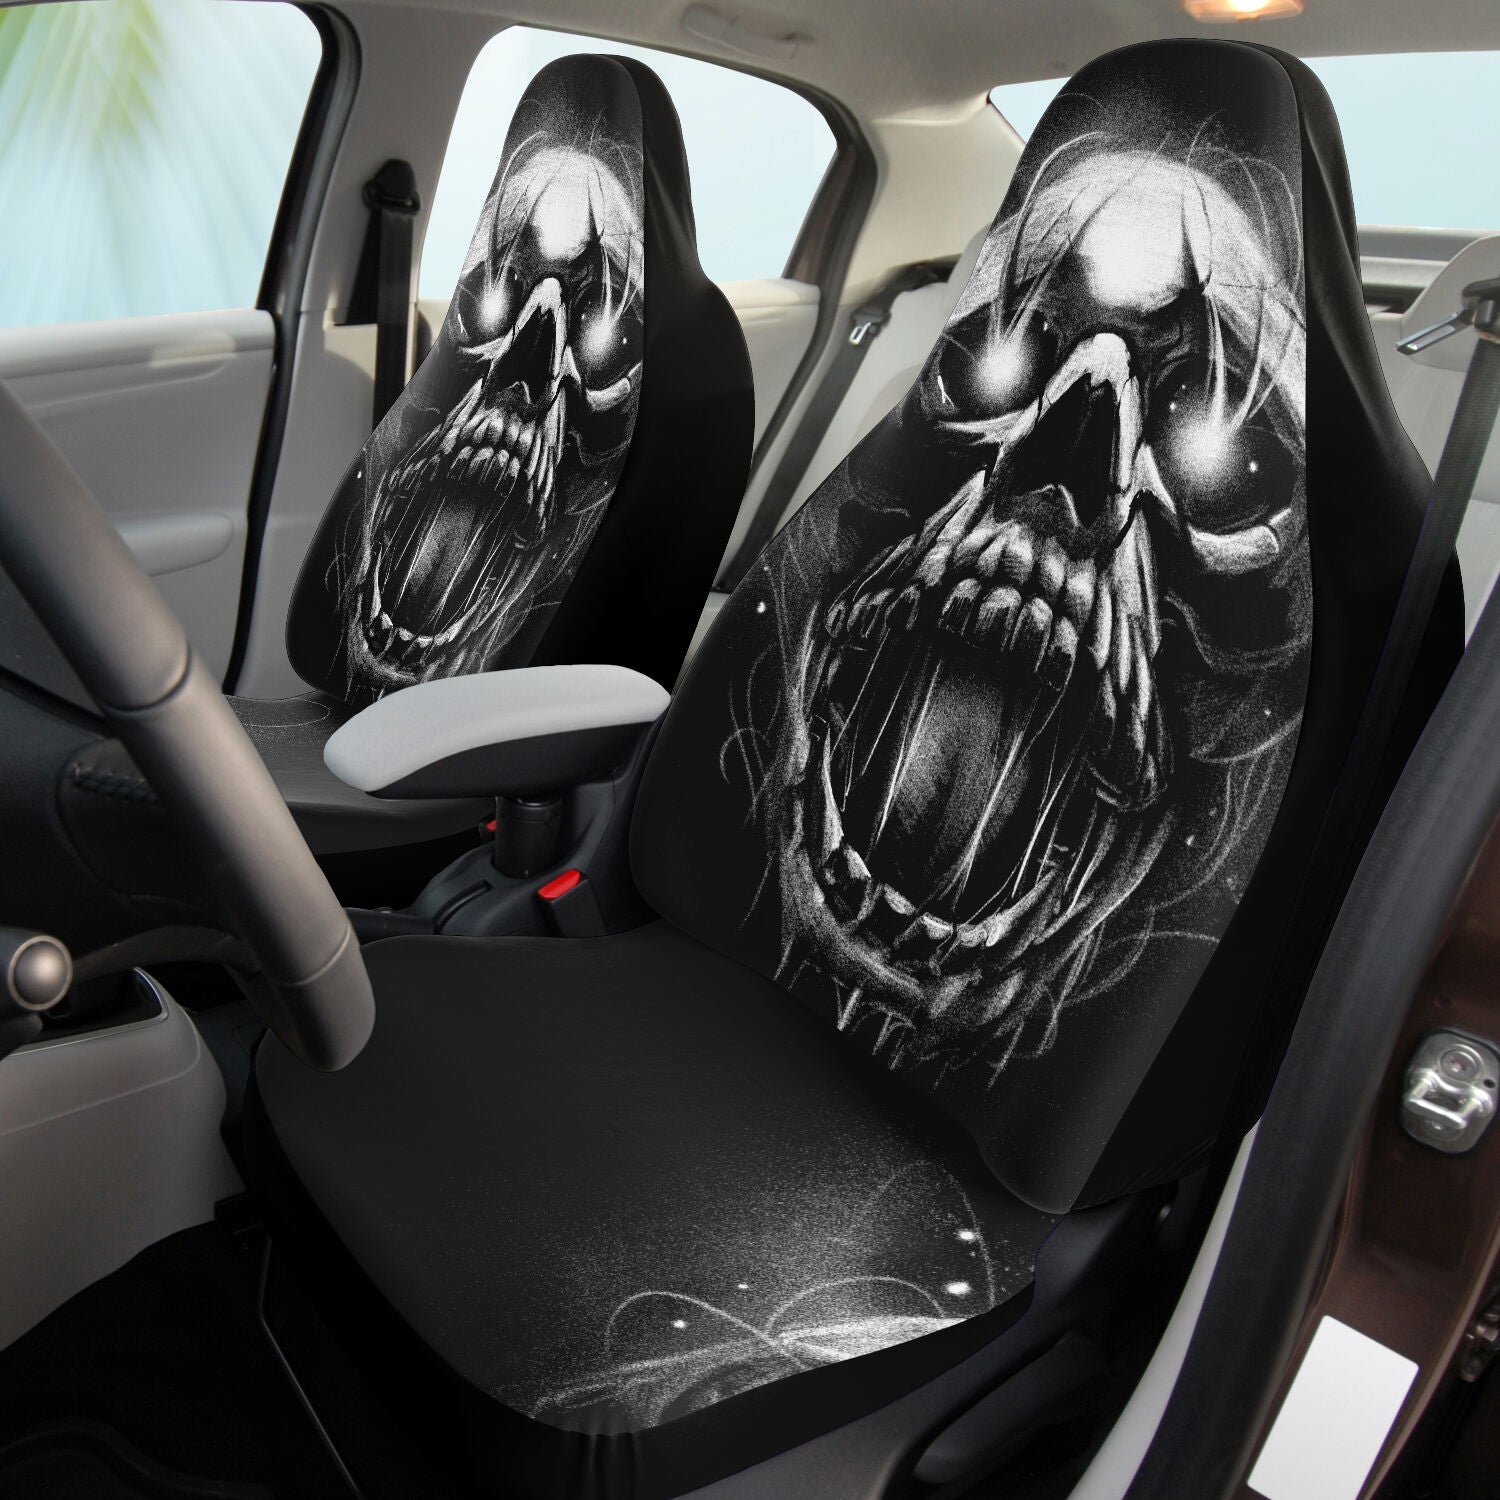 Dark And Light Skull Car Seat Cover Set